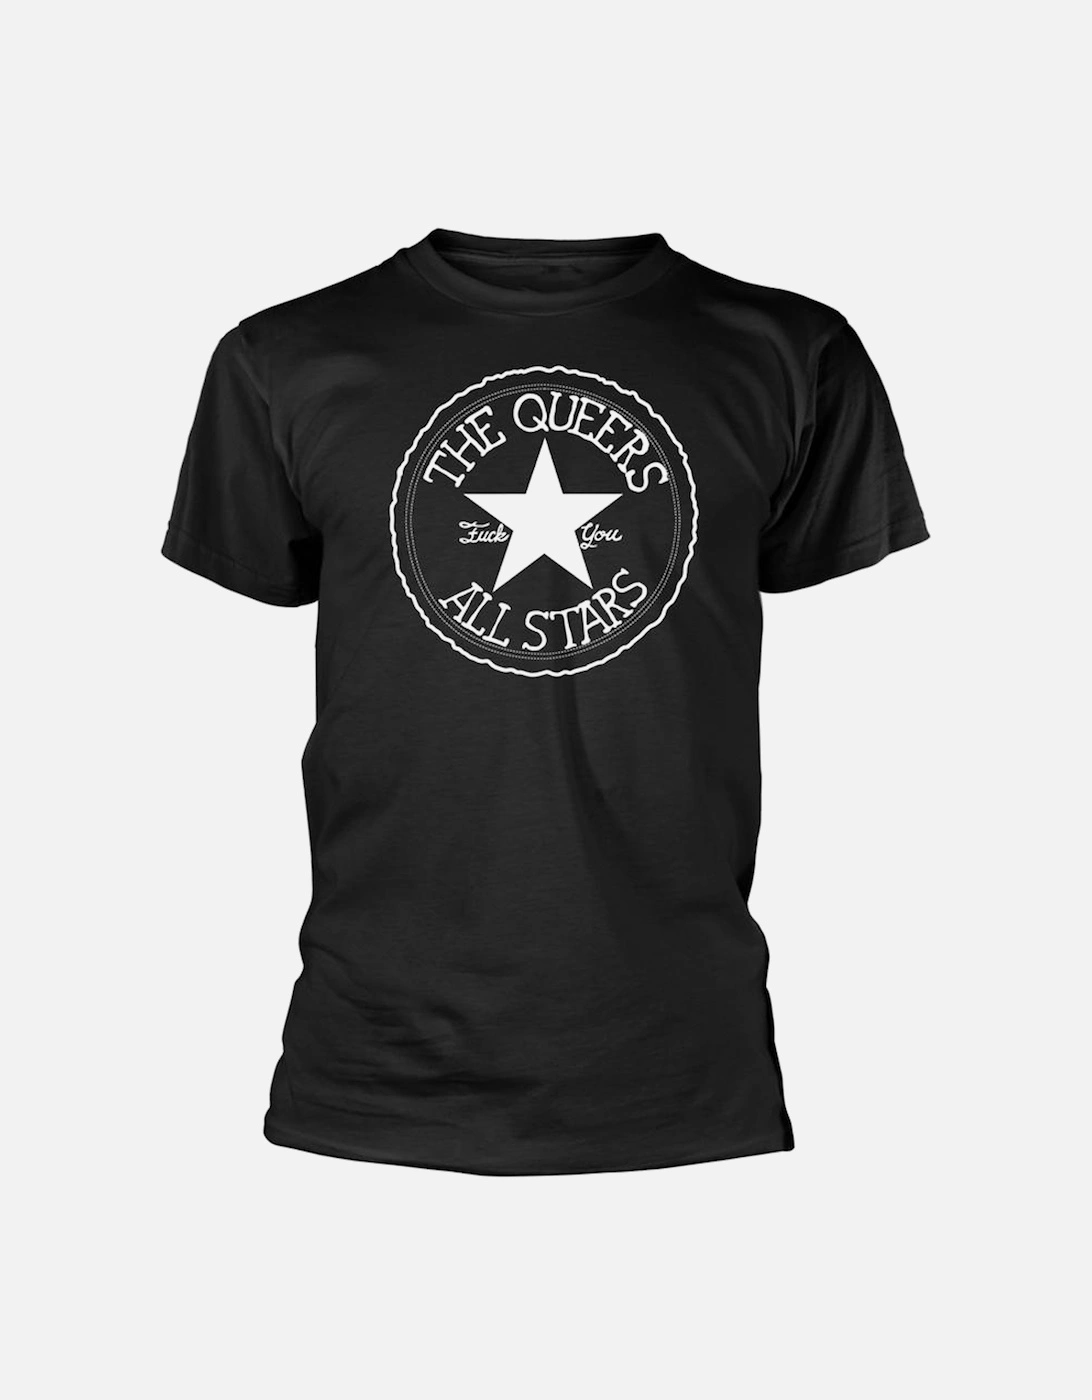 Unisex Adult All Stars T-Shirt, 2 of 1